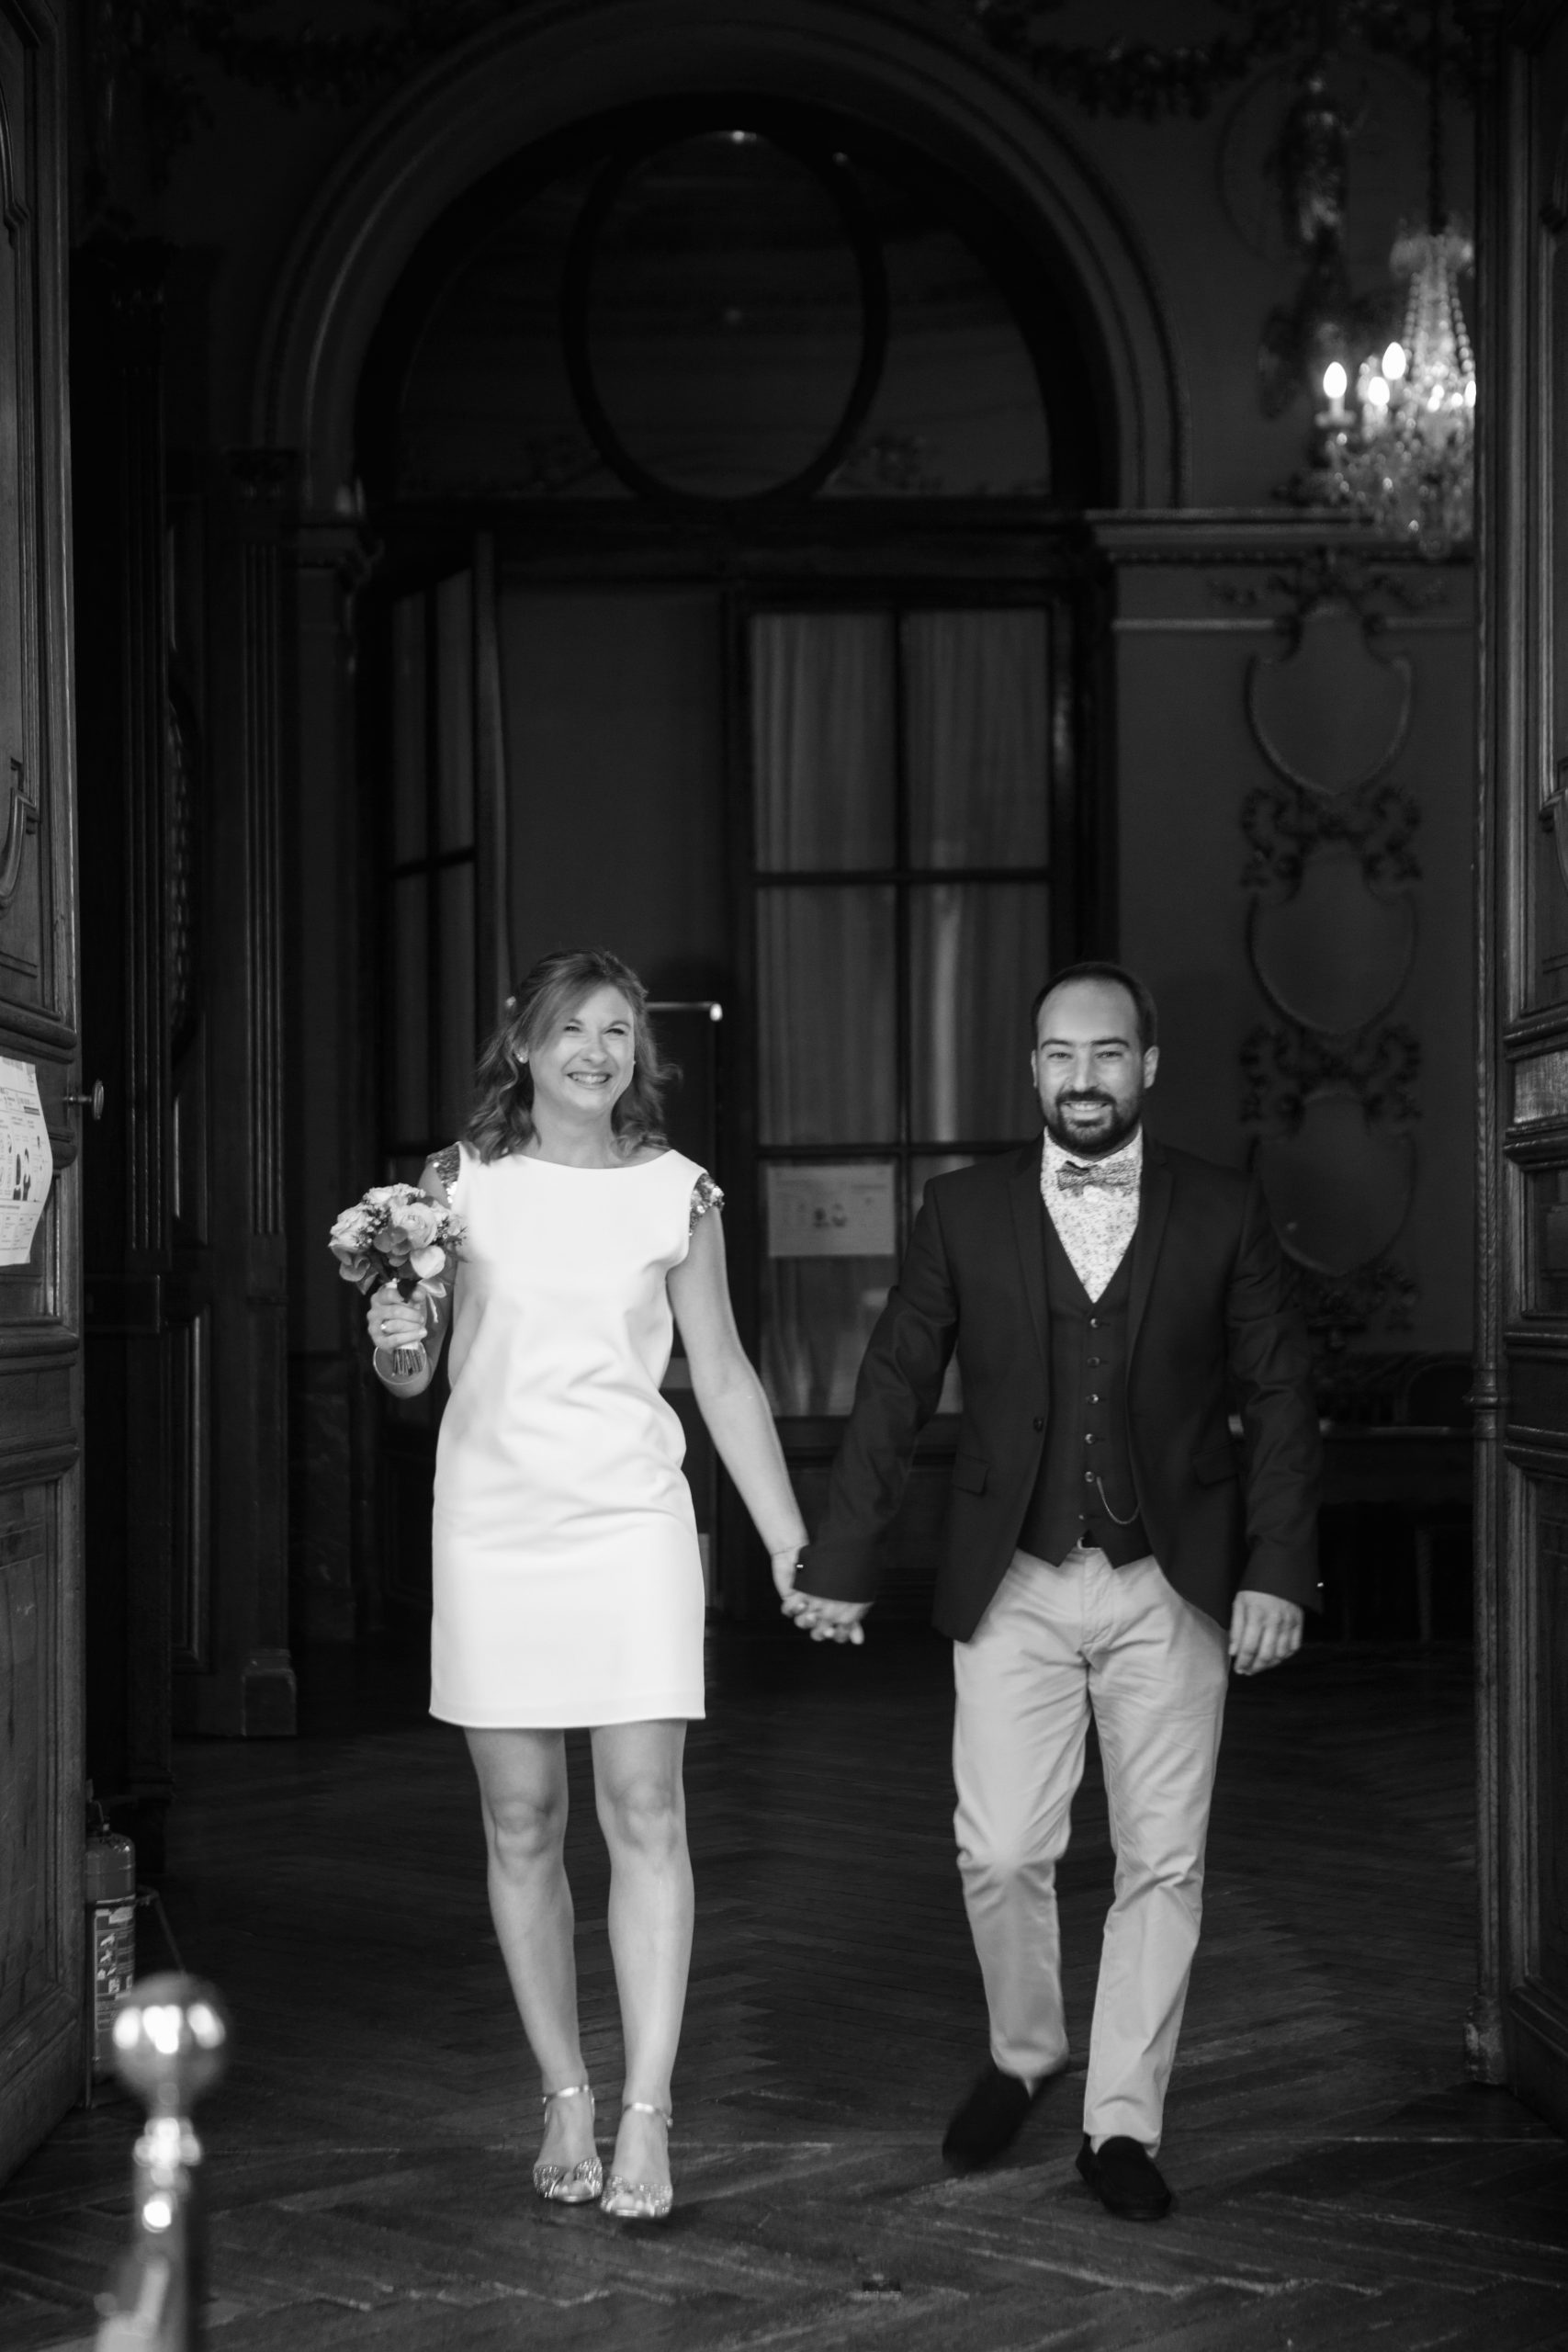 Mariage Toulouse - photographe mariage toulouse